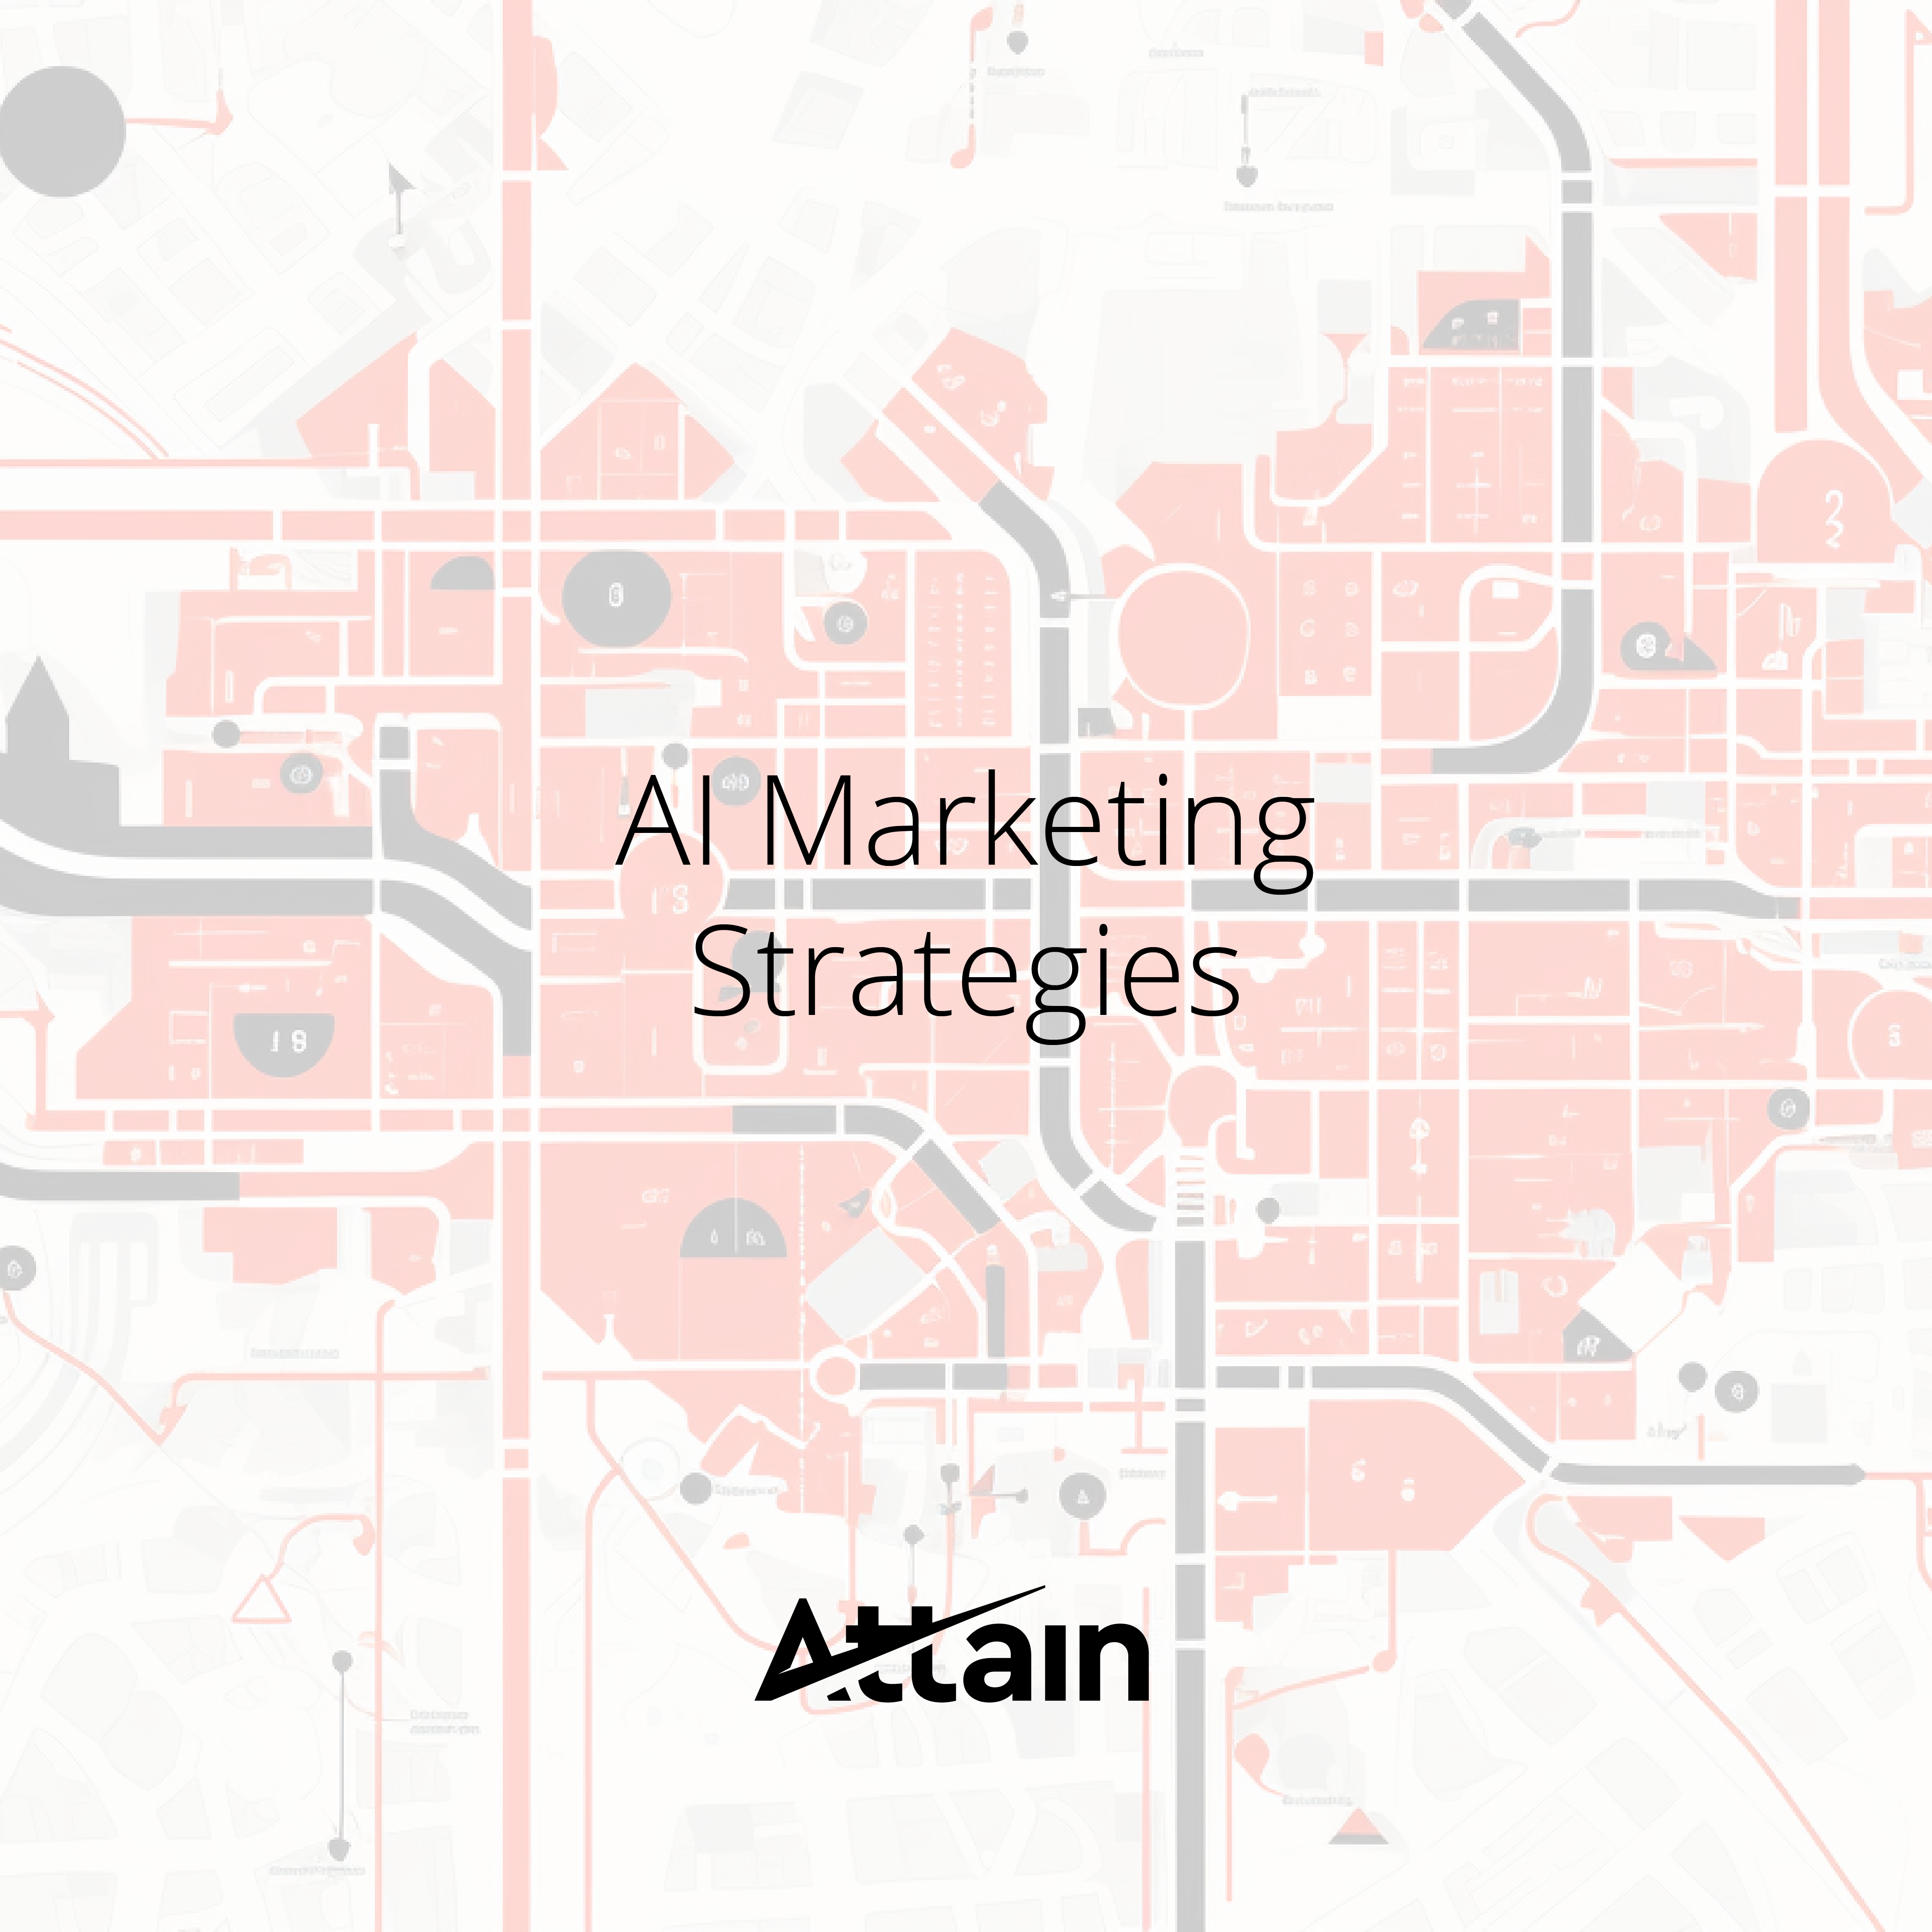 Leveraging AI Marketing Strategies